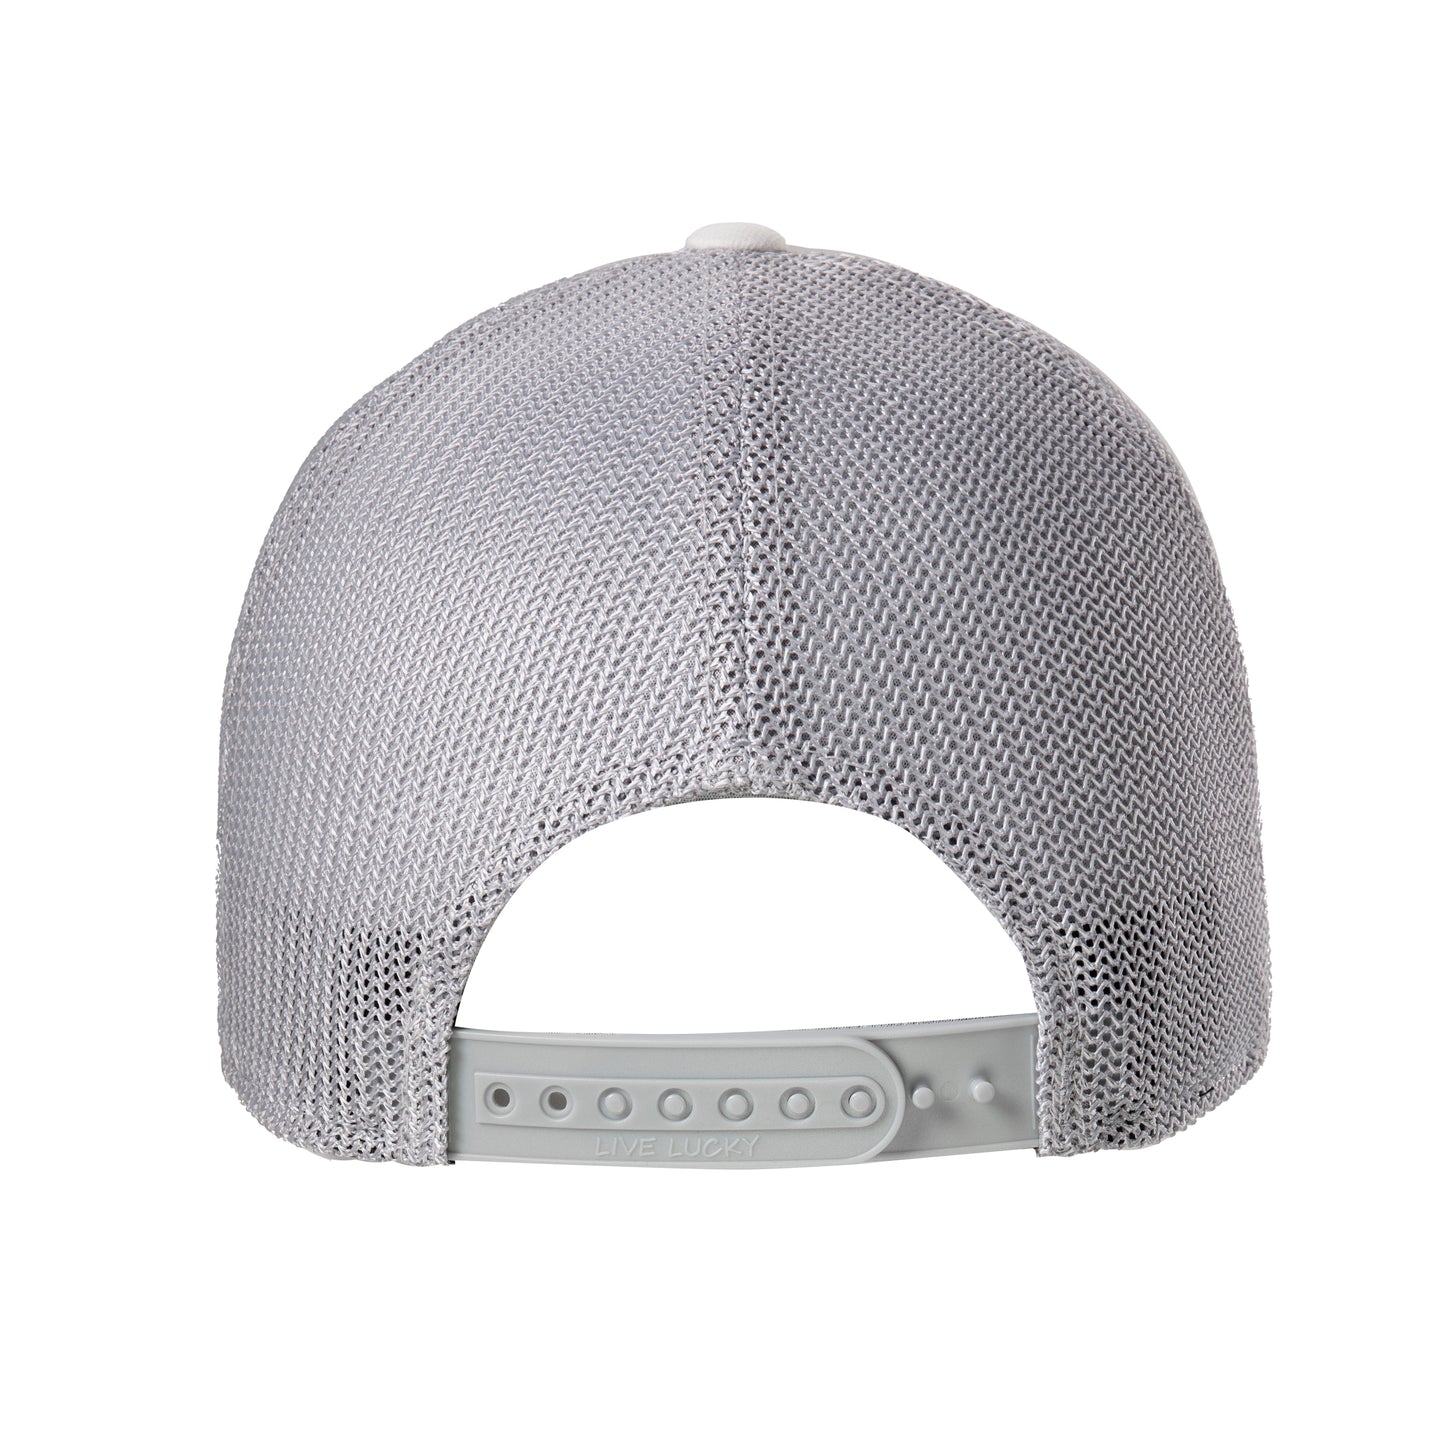 Black Clover California Shield Snapback Hat